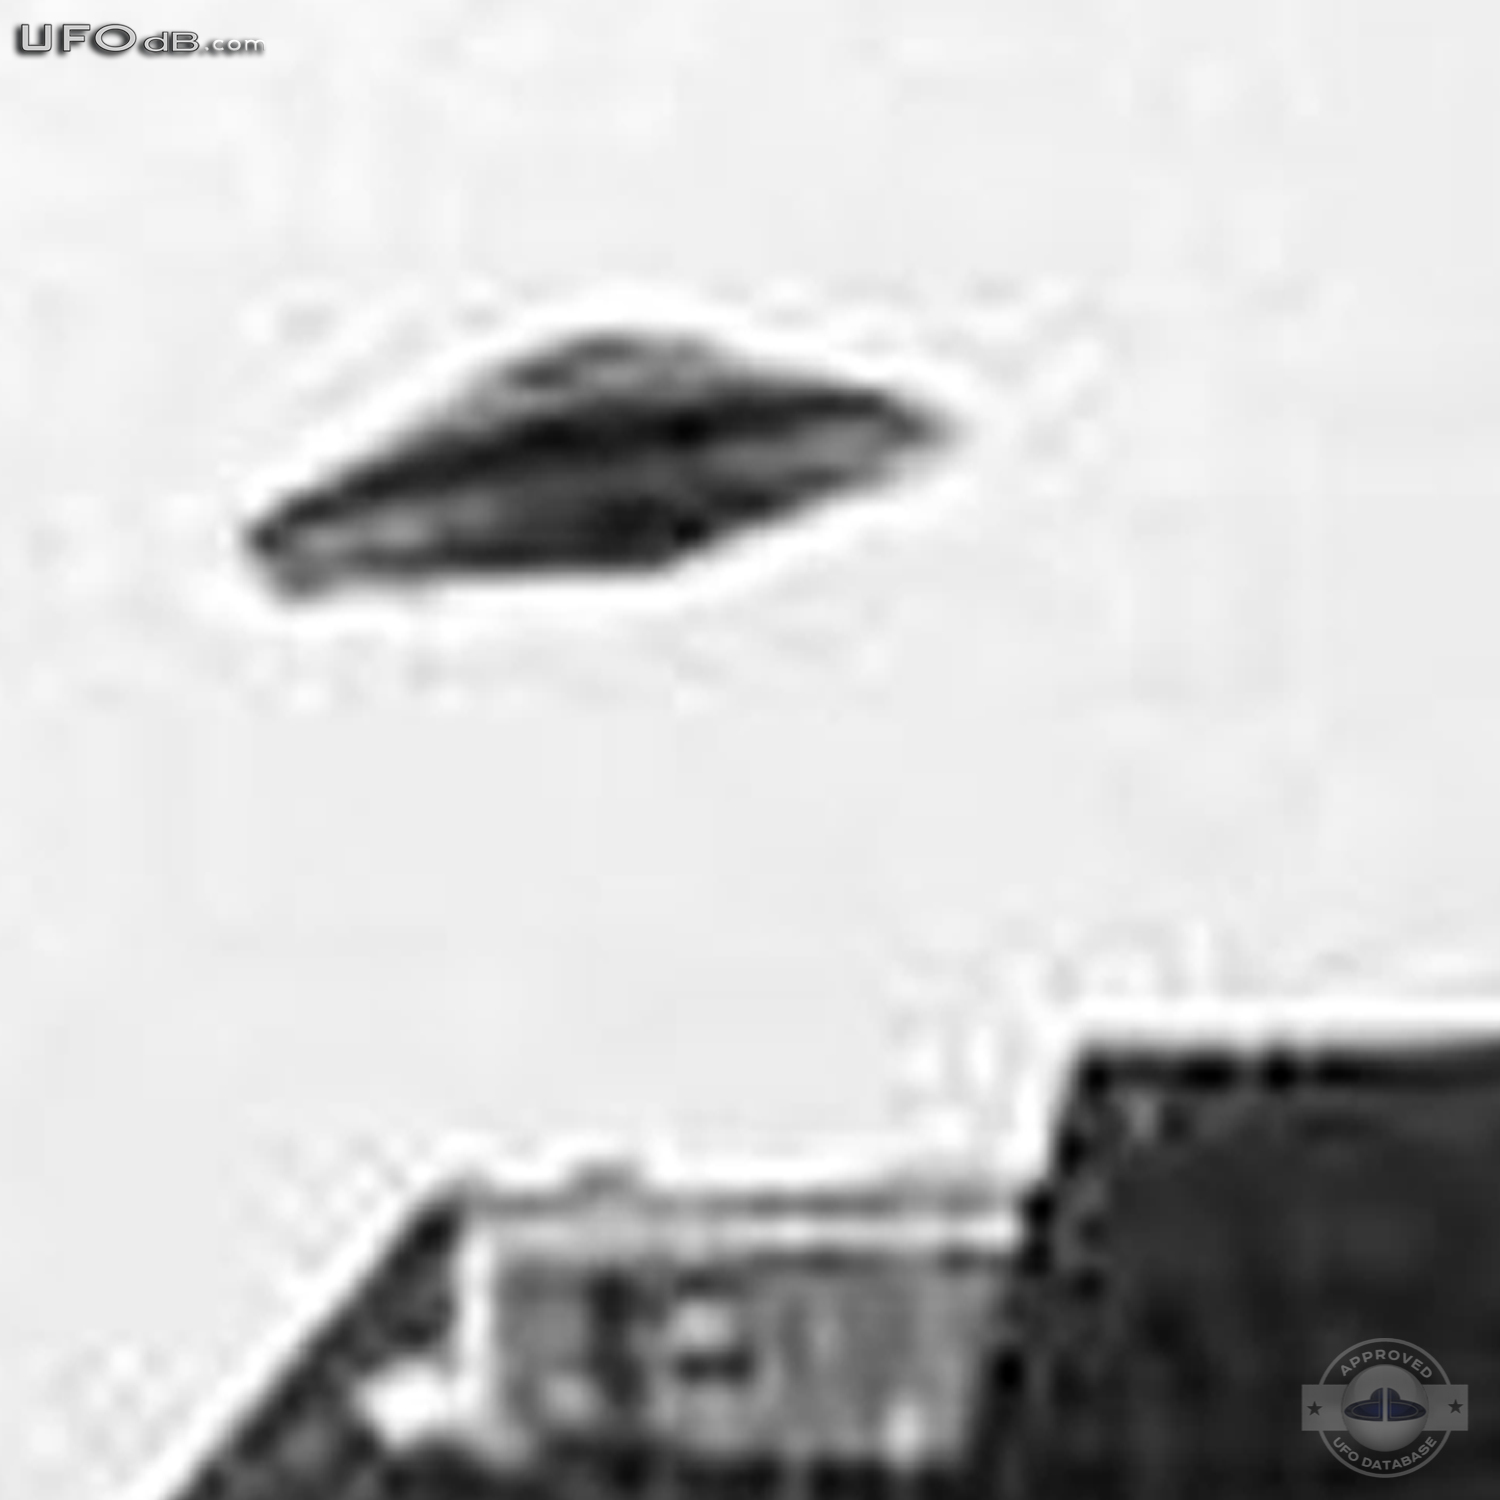 Aarhus Denmark - Rare Classic Saucer Shape UFO picture | November 1971 UFO Picture #320-5